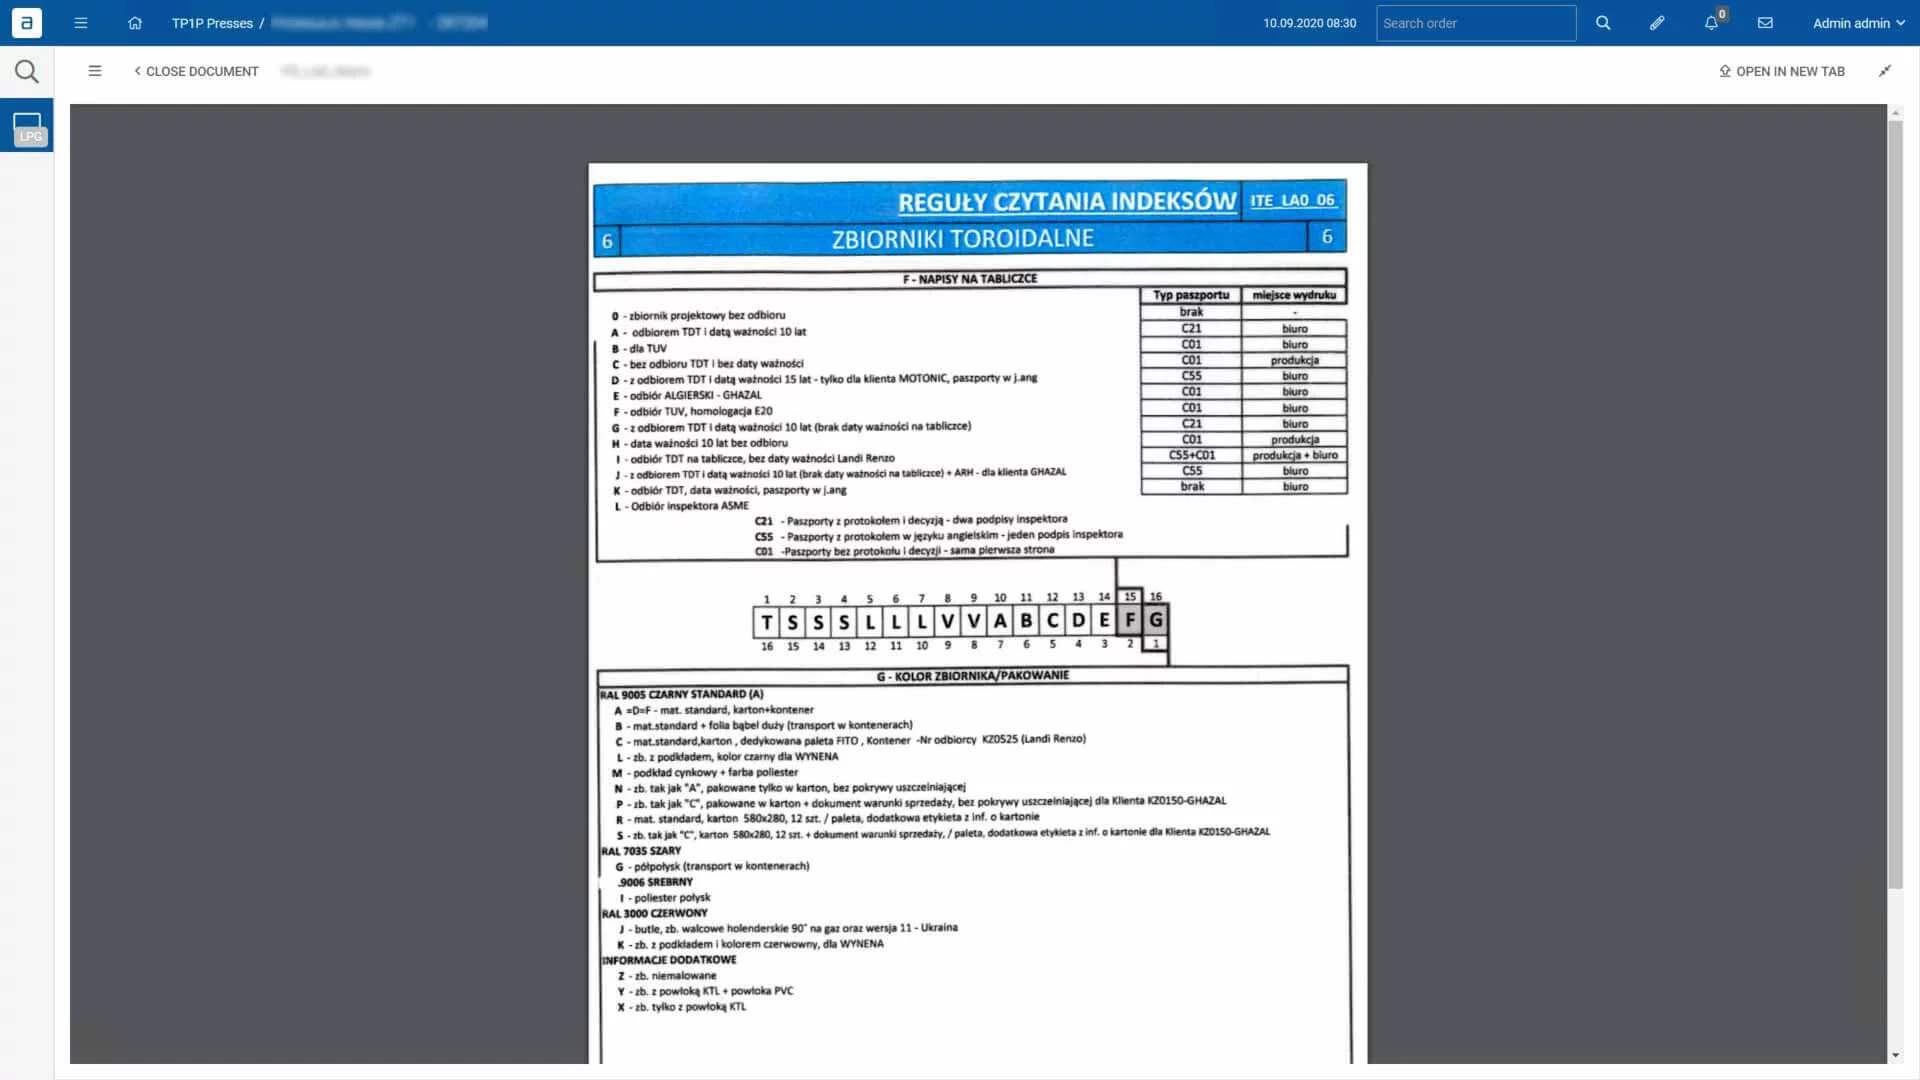 Opened fullscreen documentation on Operator Panel